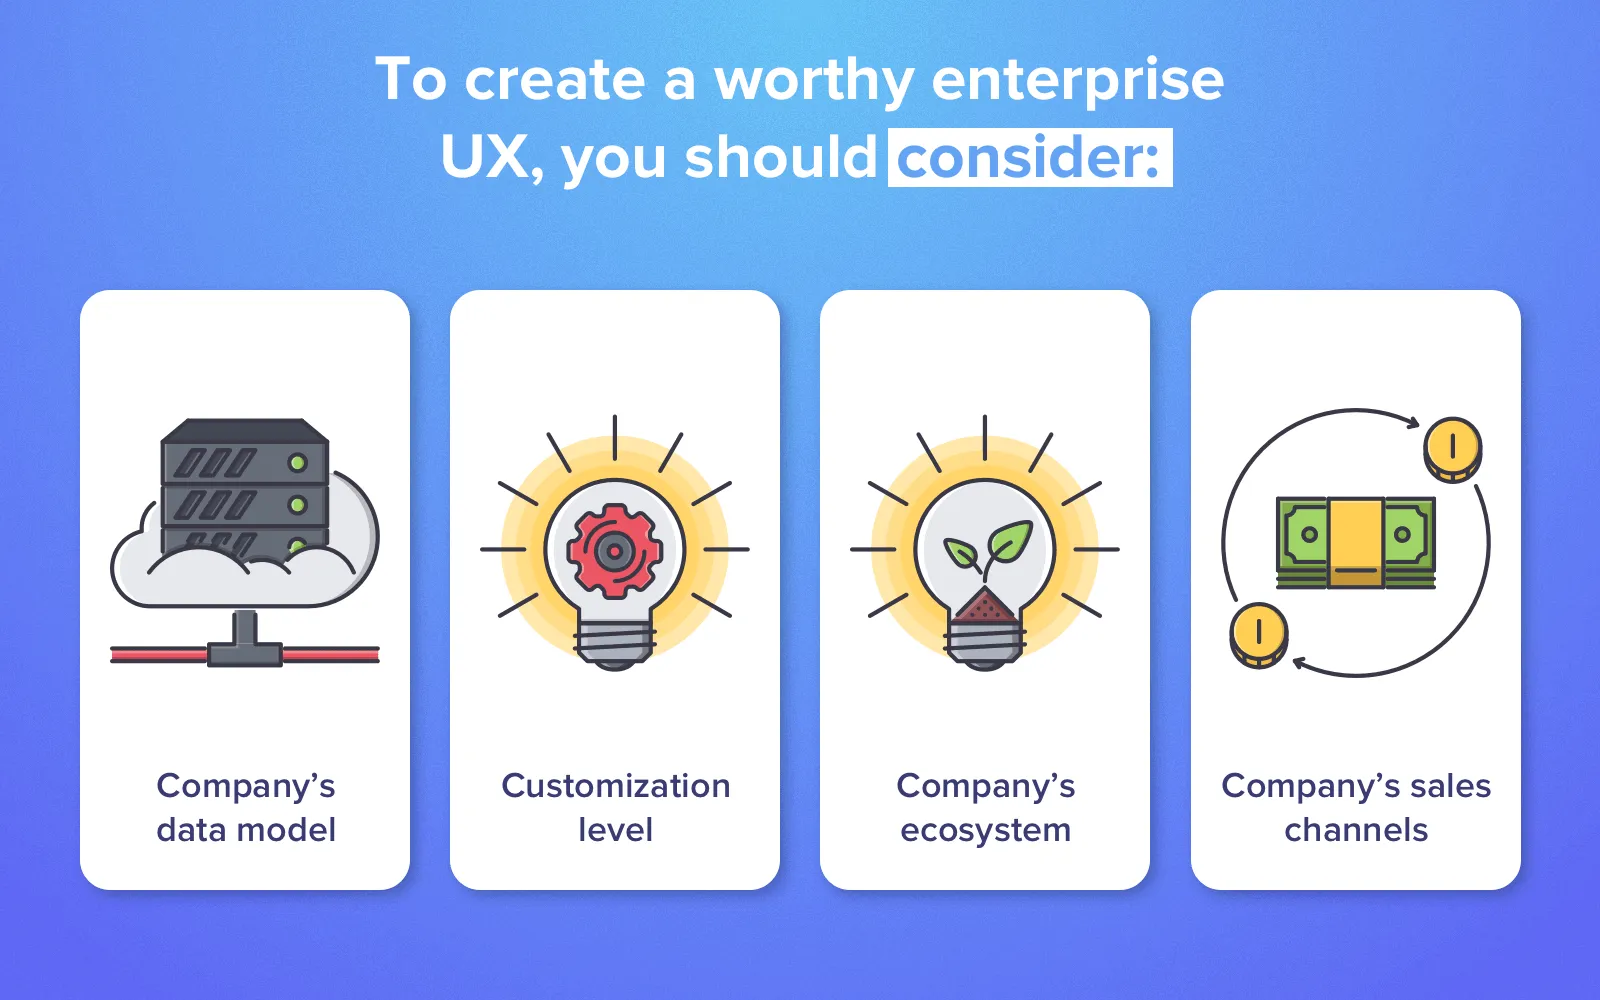 Enterprise UX design: What to consider